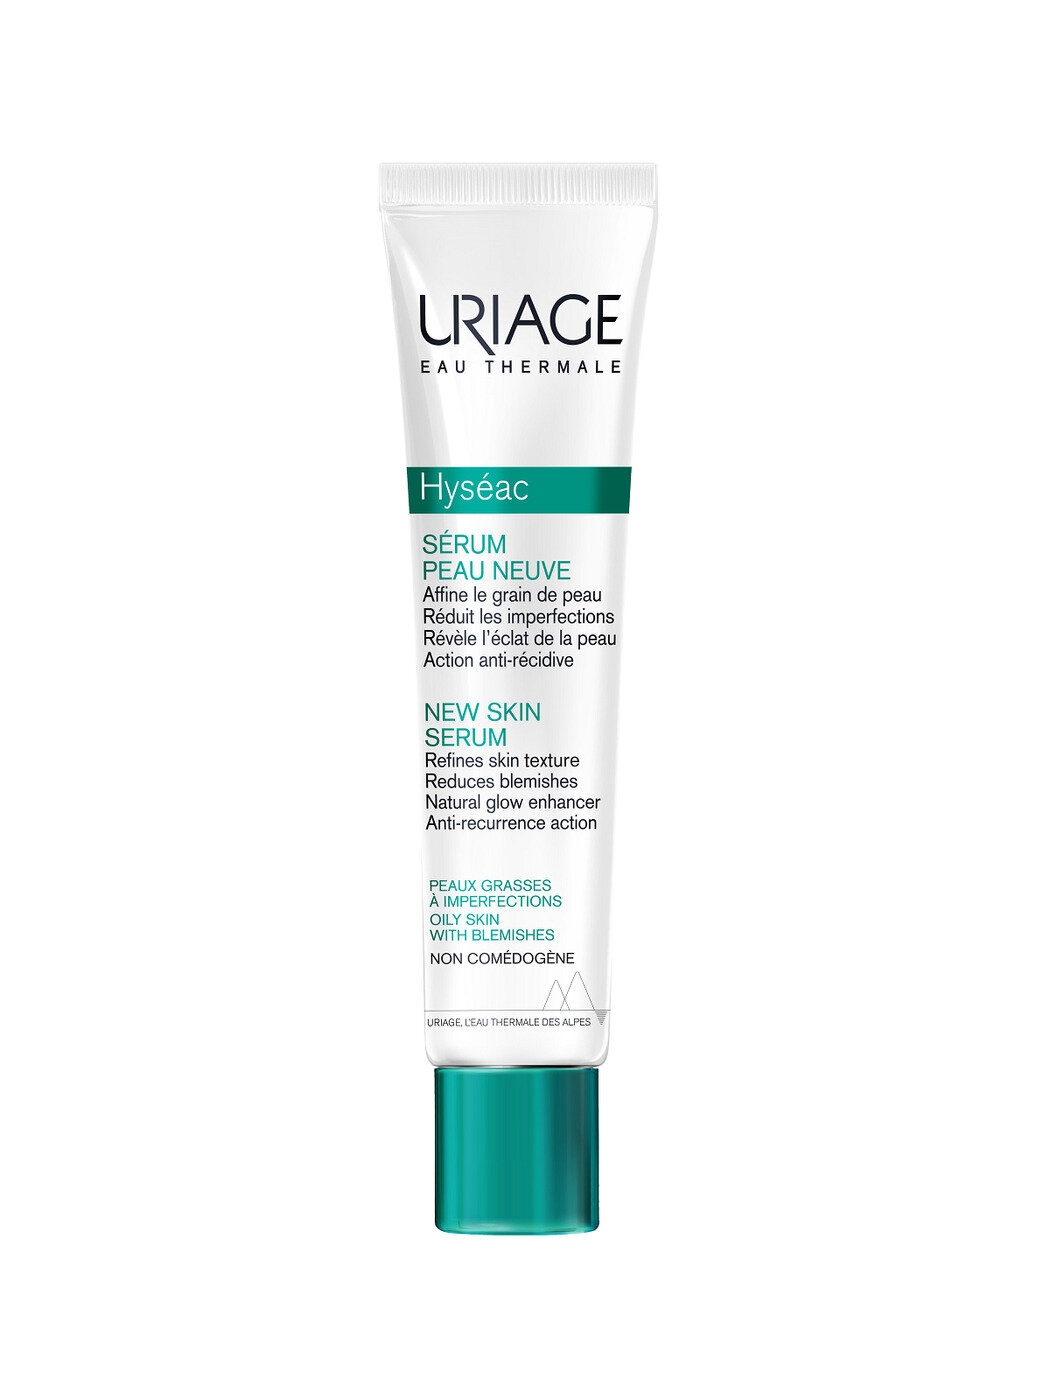 Uriage Обновляющая кожу сыворотка New Skin Serum Hyseac, 40 мл